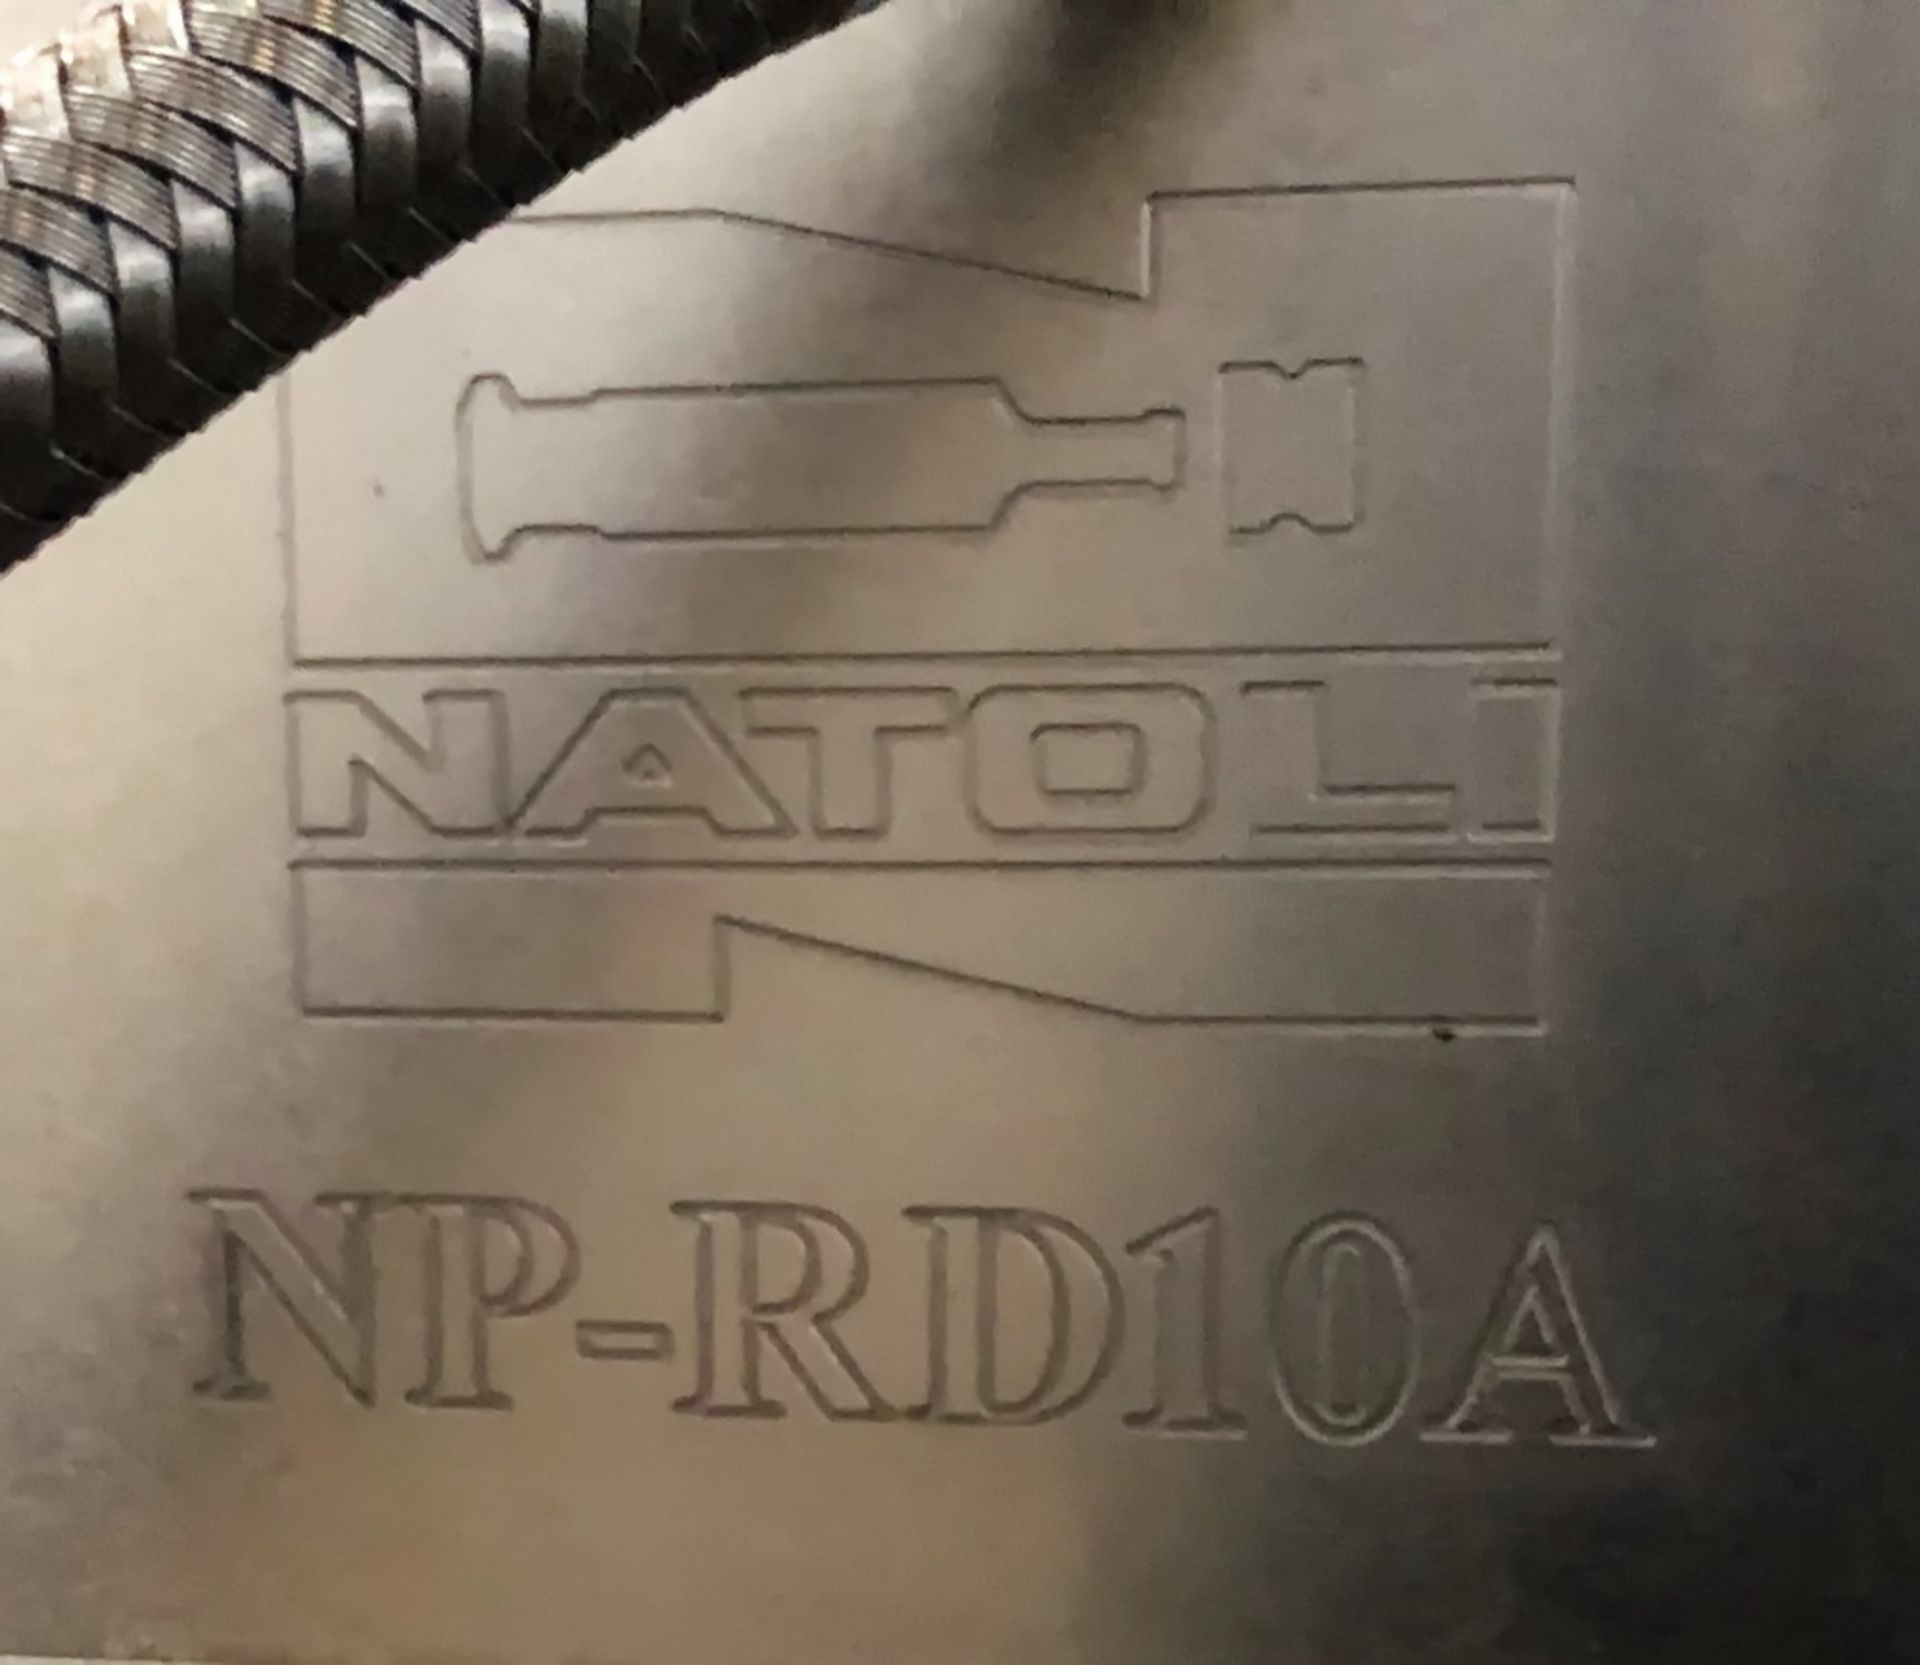 Natoli Benchtop Manual Single Station Tablet Press, Model NP-RD10A - Image 2 of 2